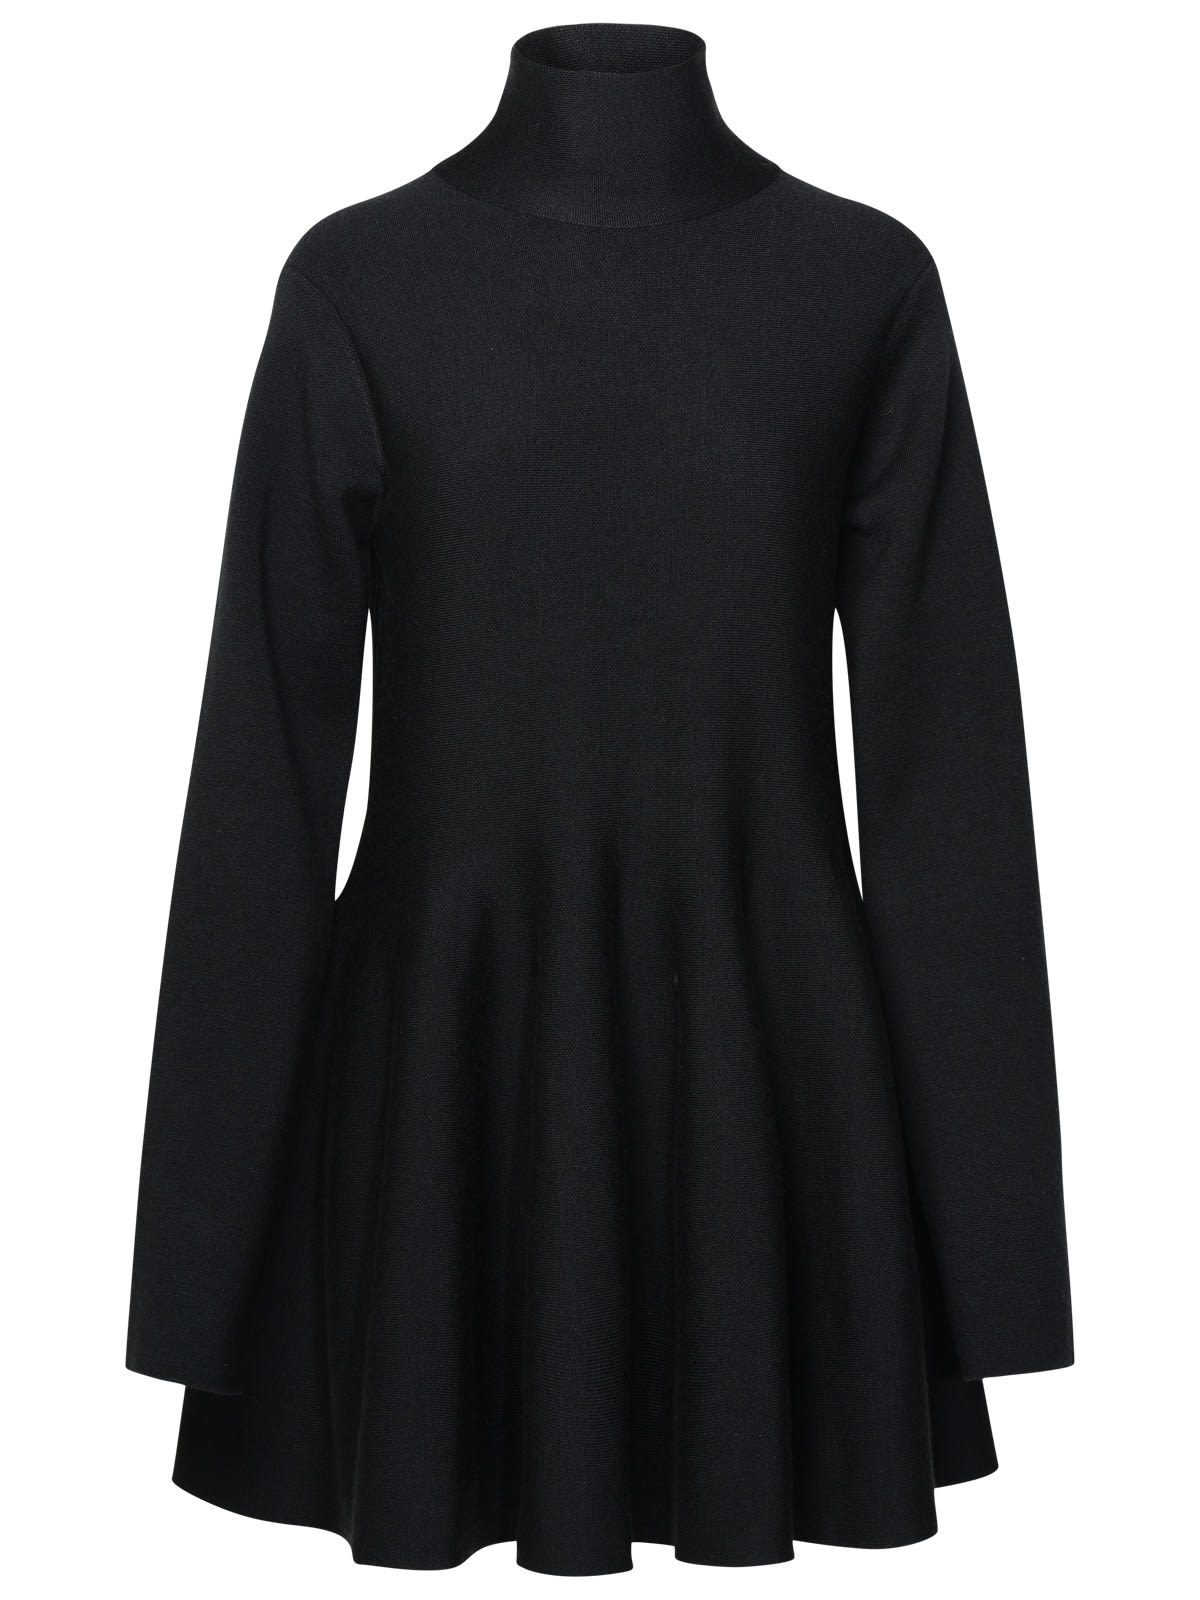 Shop Khaite Black Wool Blend Dress